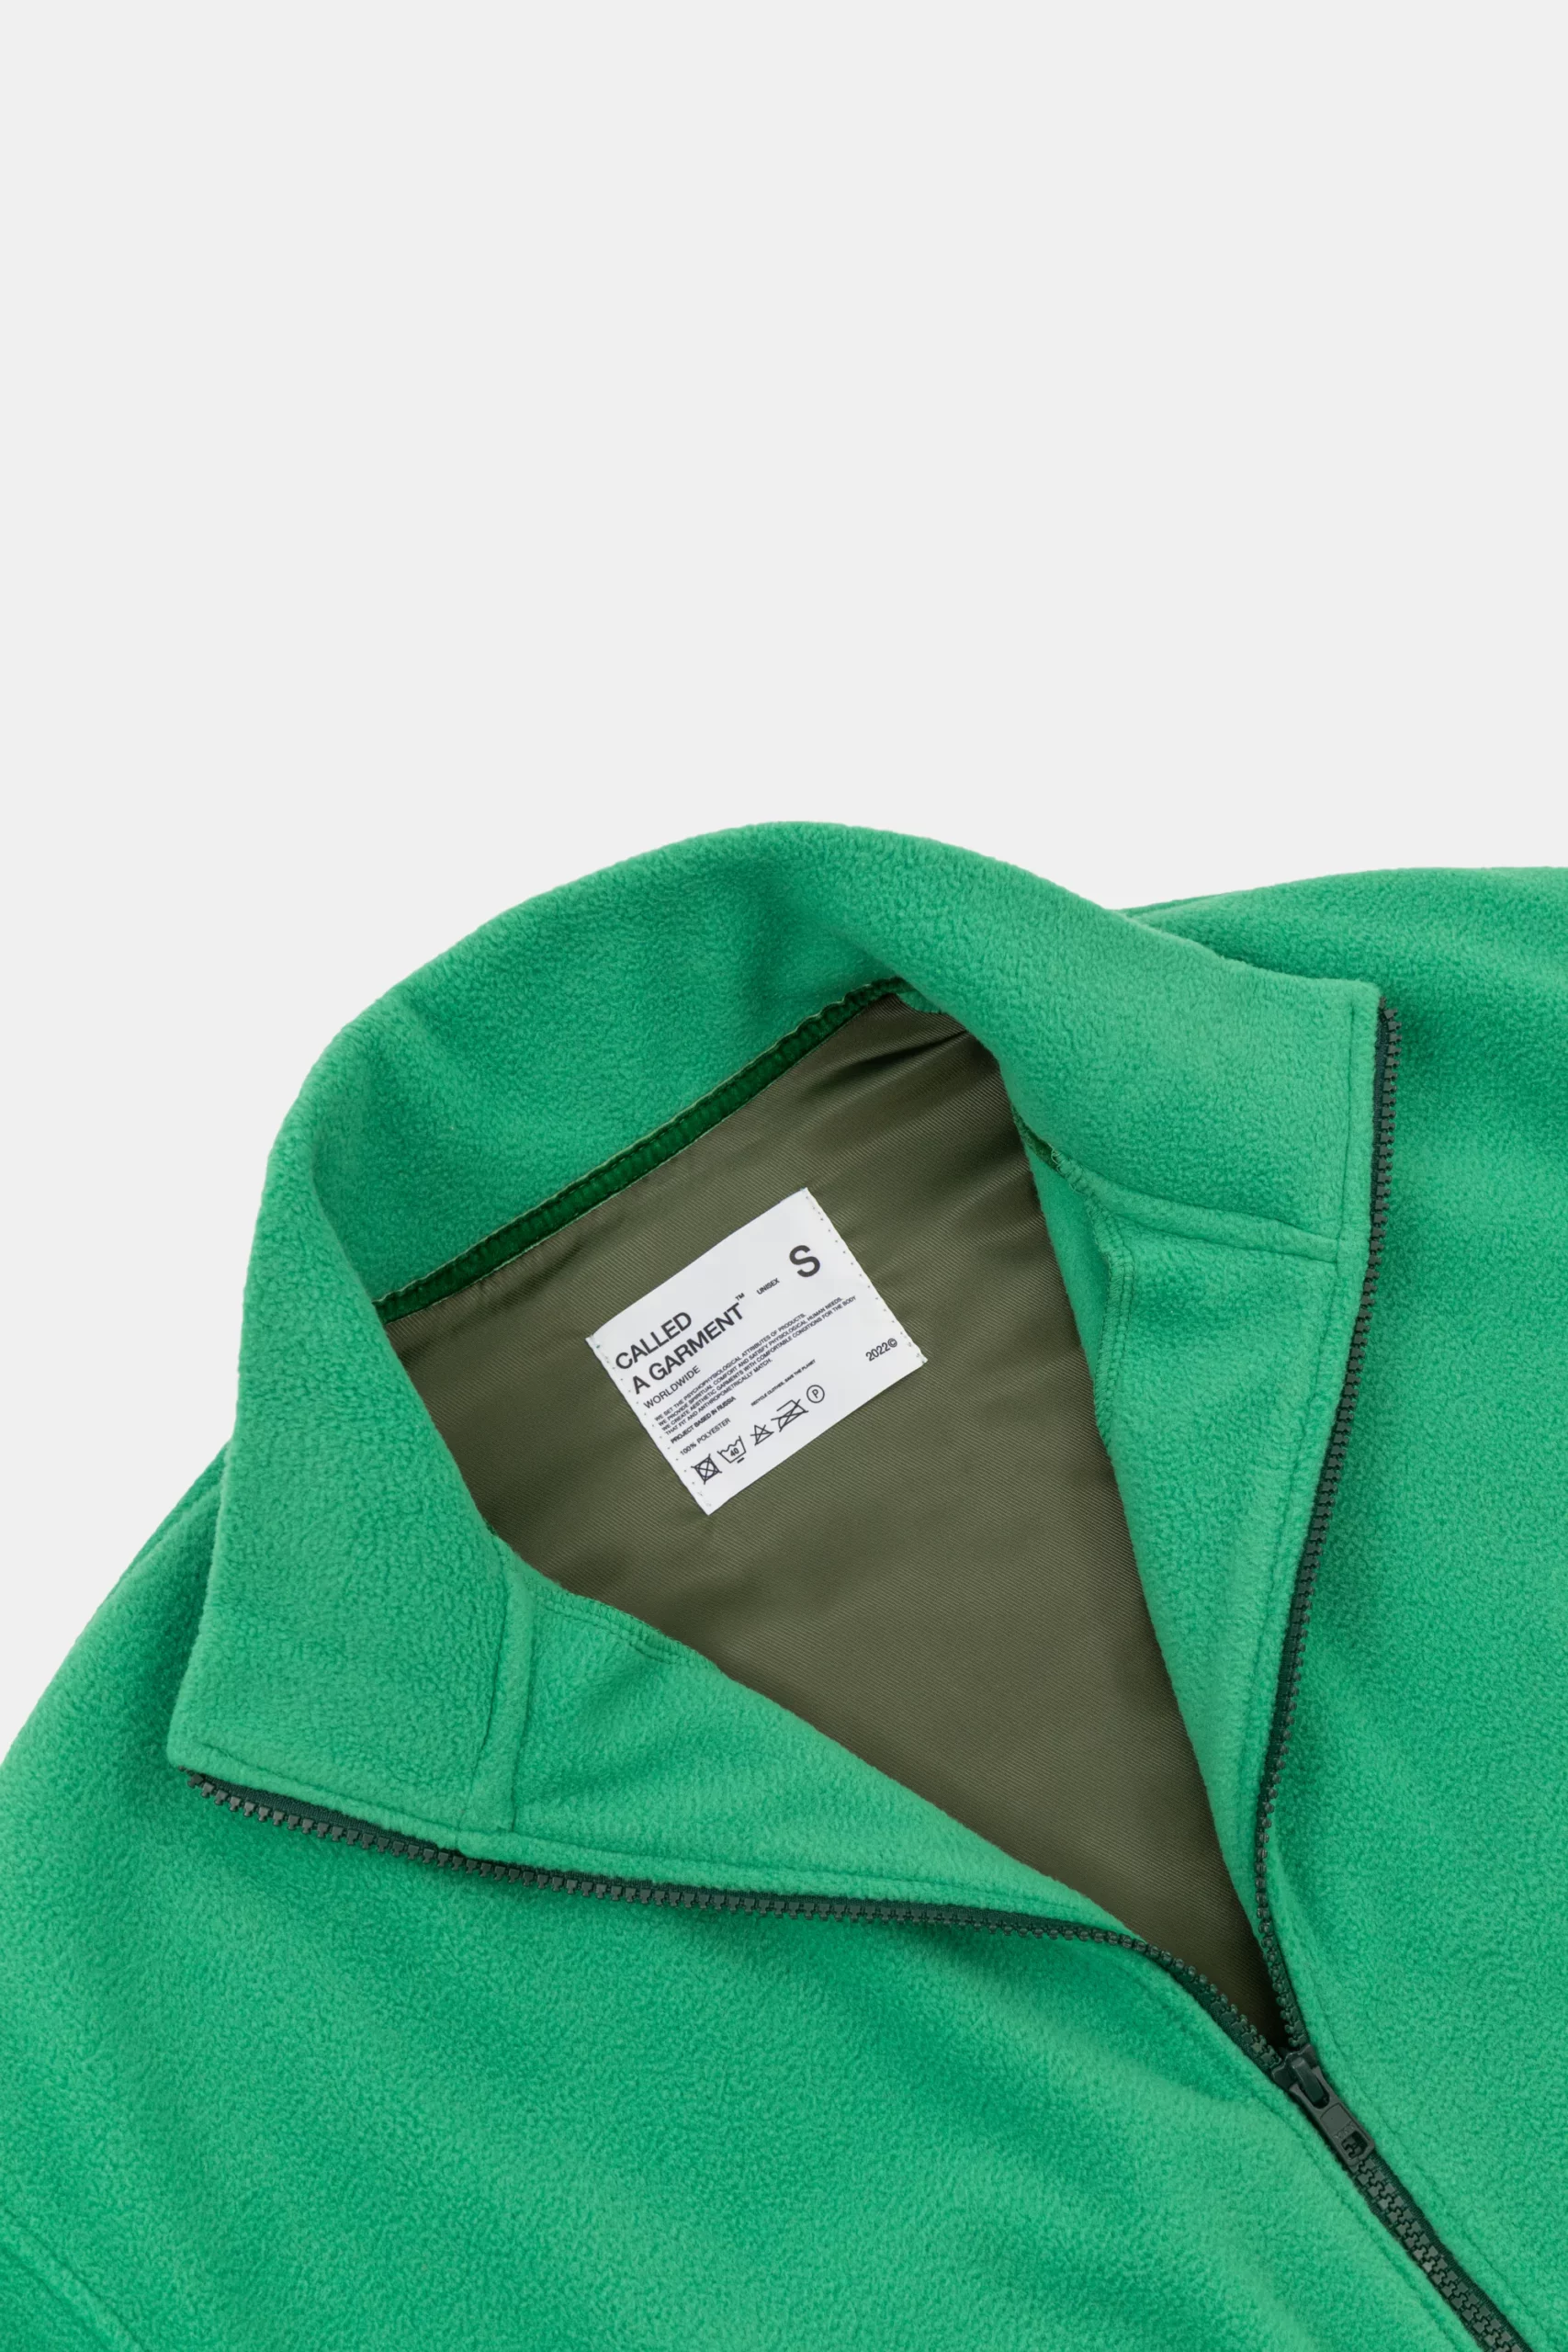 tolstovka called a garment zip fleece logo green 3